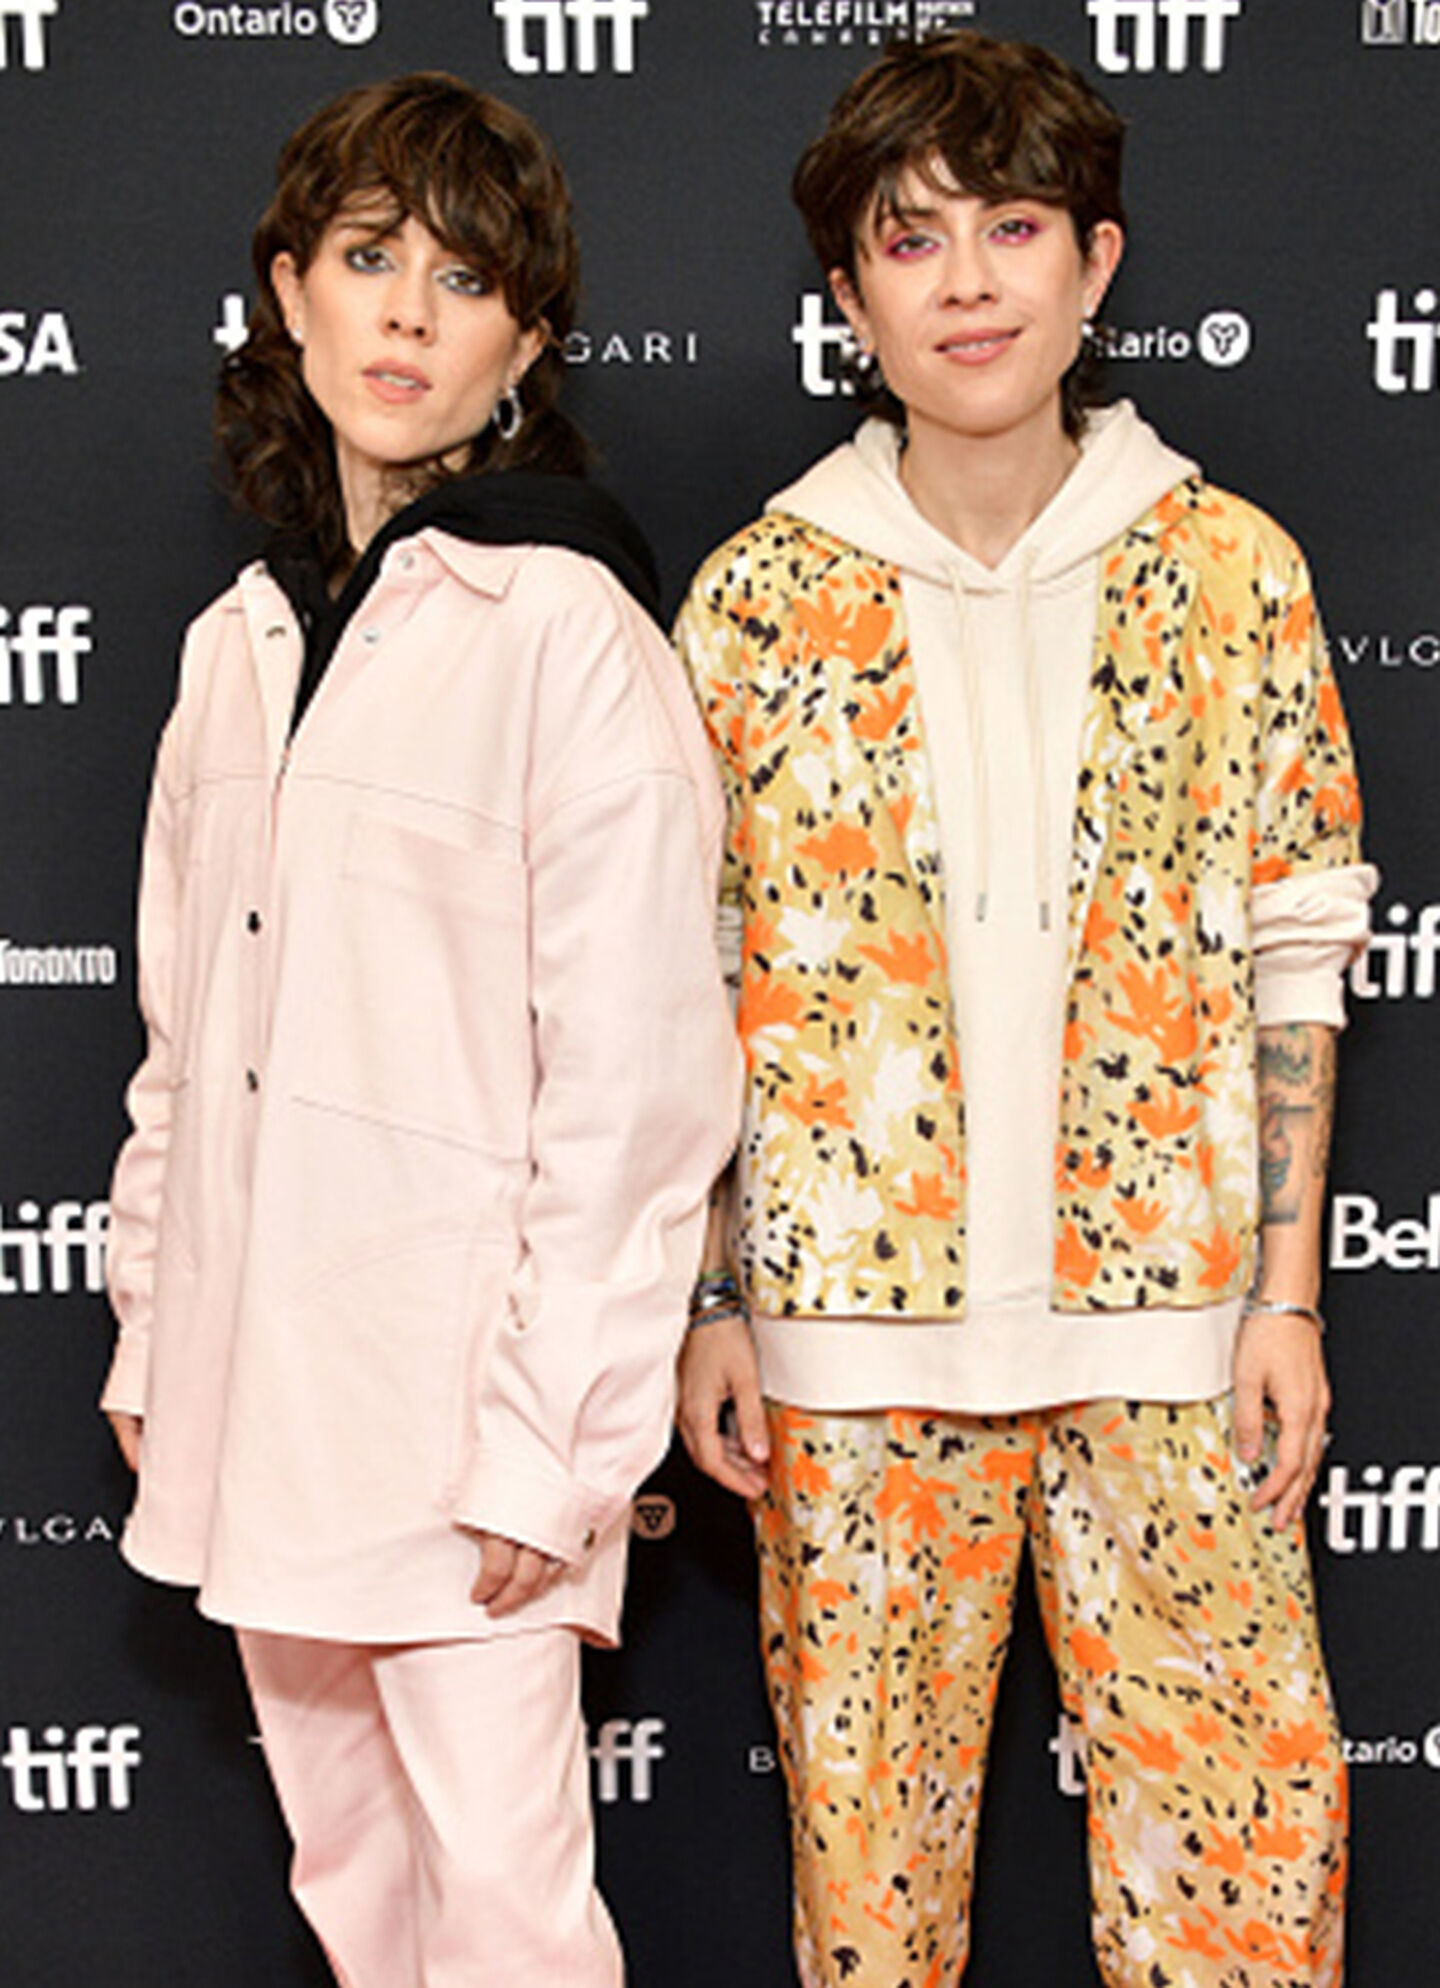 Tegan and Sara wearing Birks jewelry.